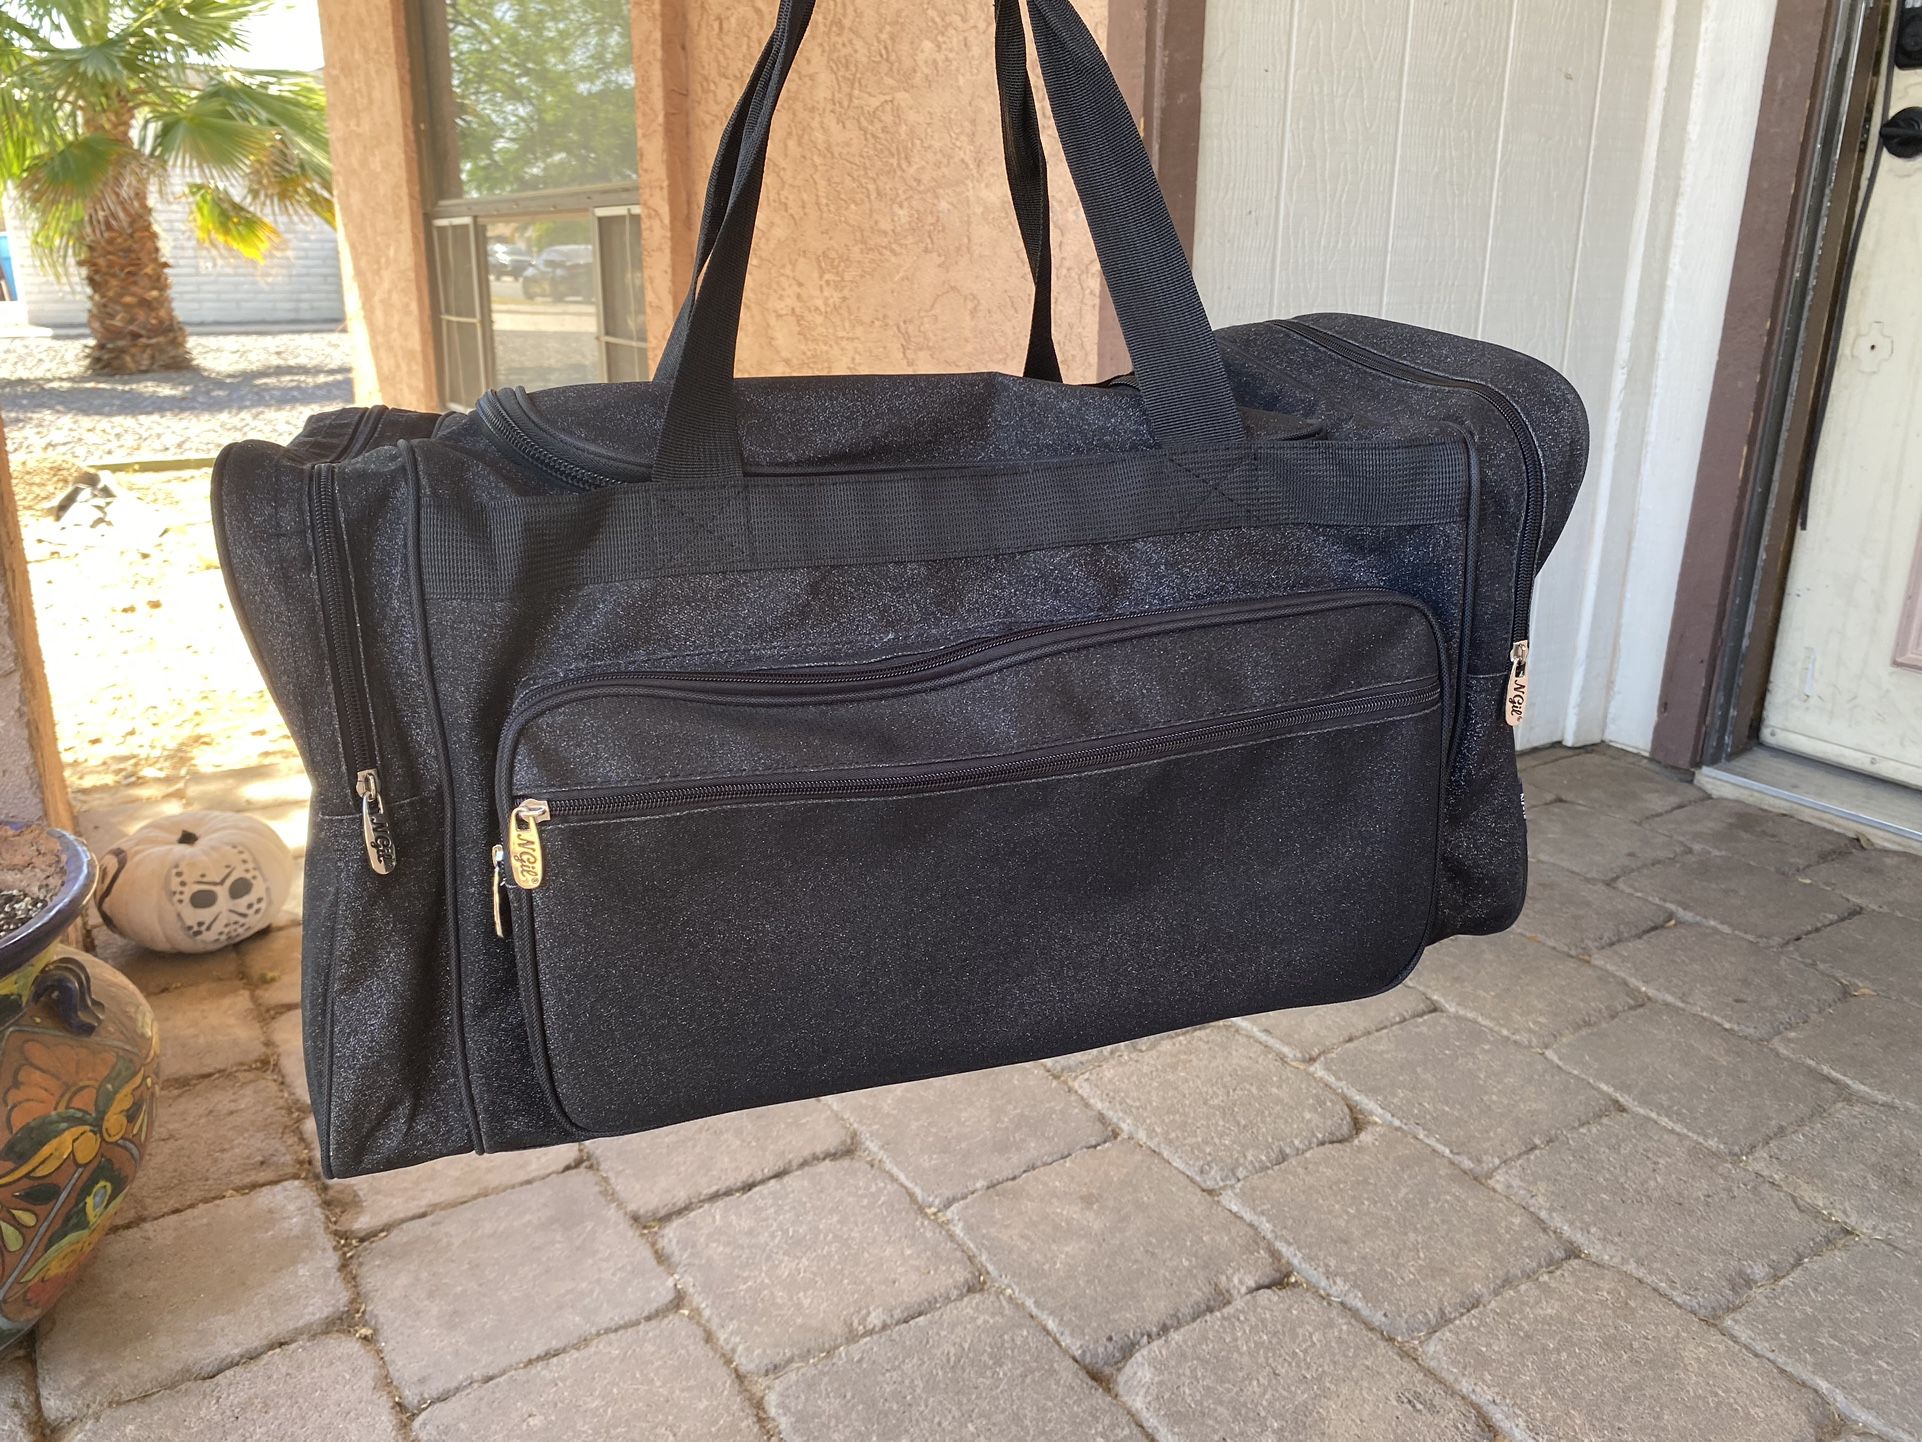 Sparkly Black Duffle Bag